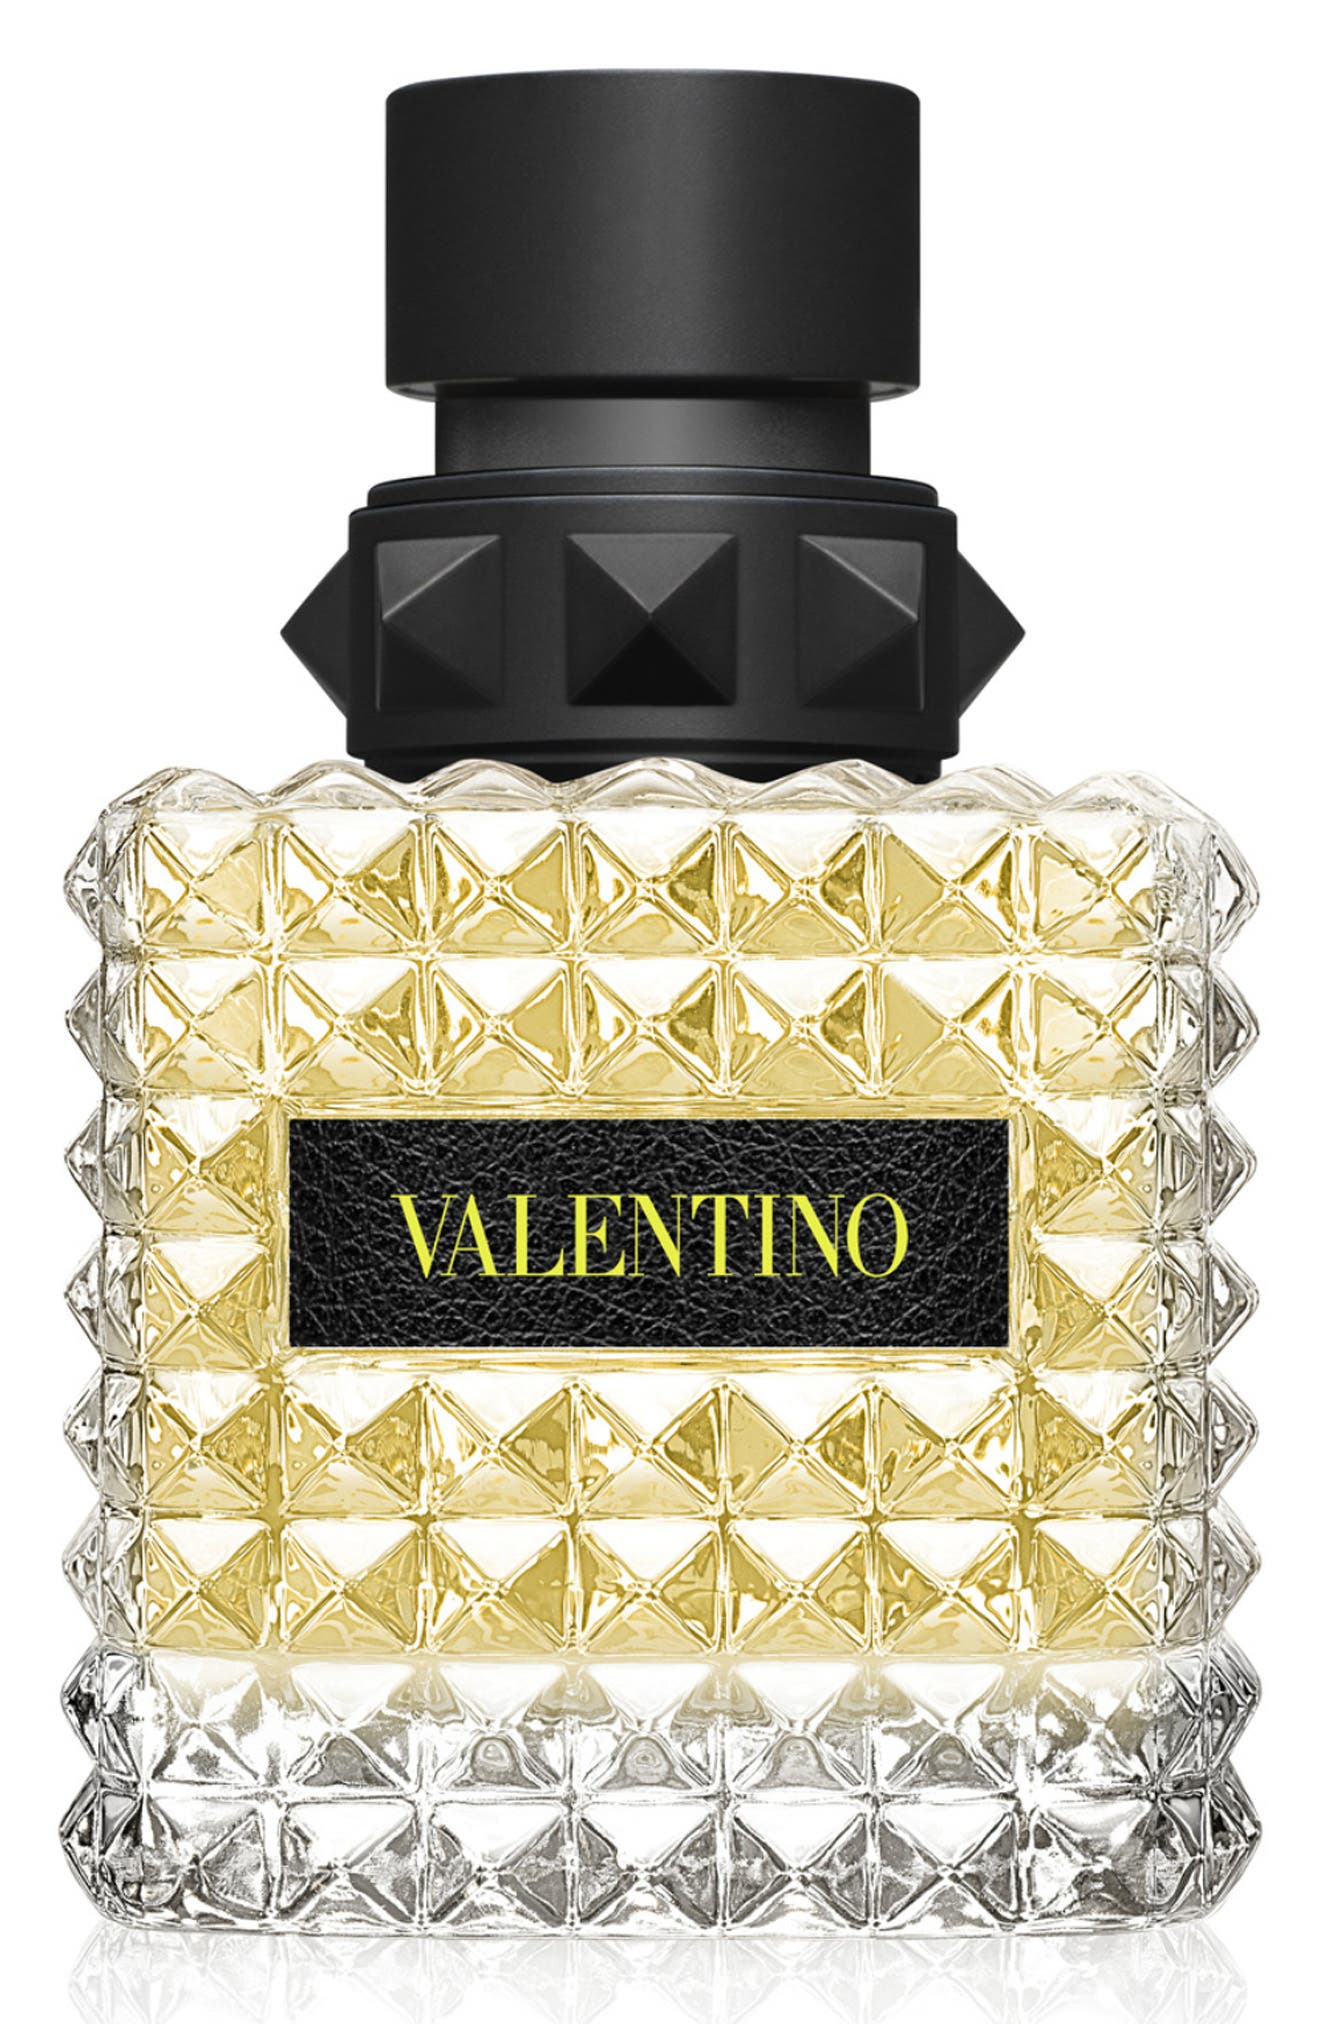 Valentino Donna Born in Roma Yellow Dream Eau de Parfum at Nordstrom, Size 3.4 Oz